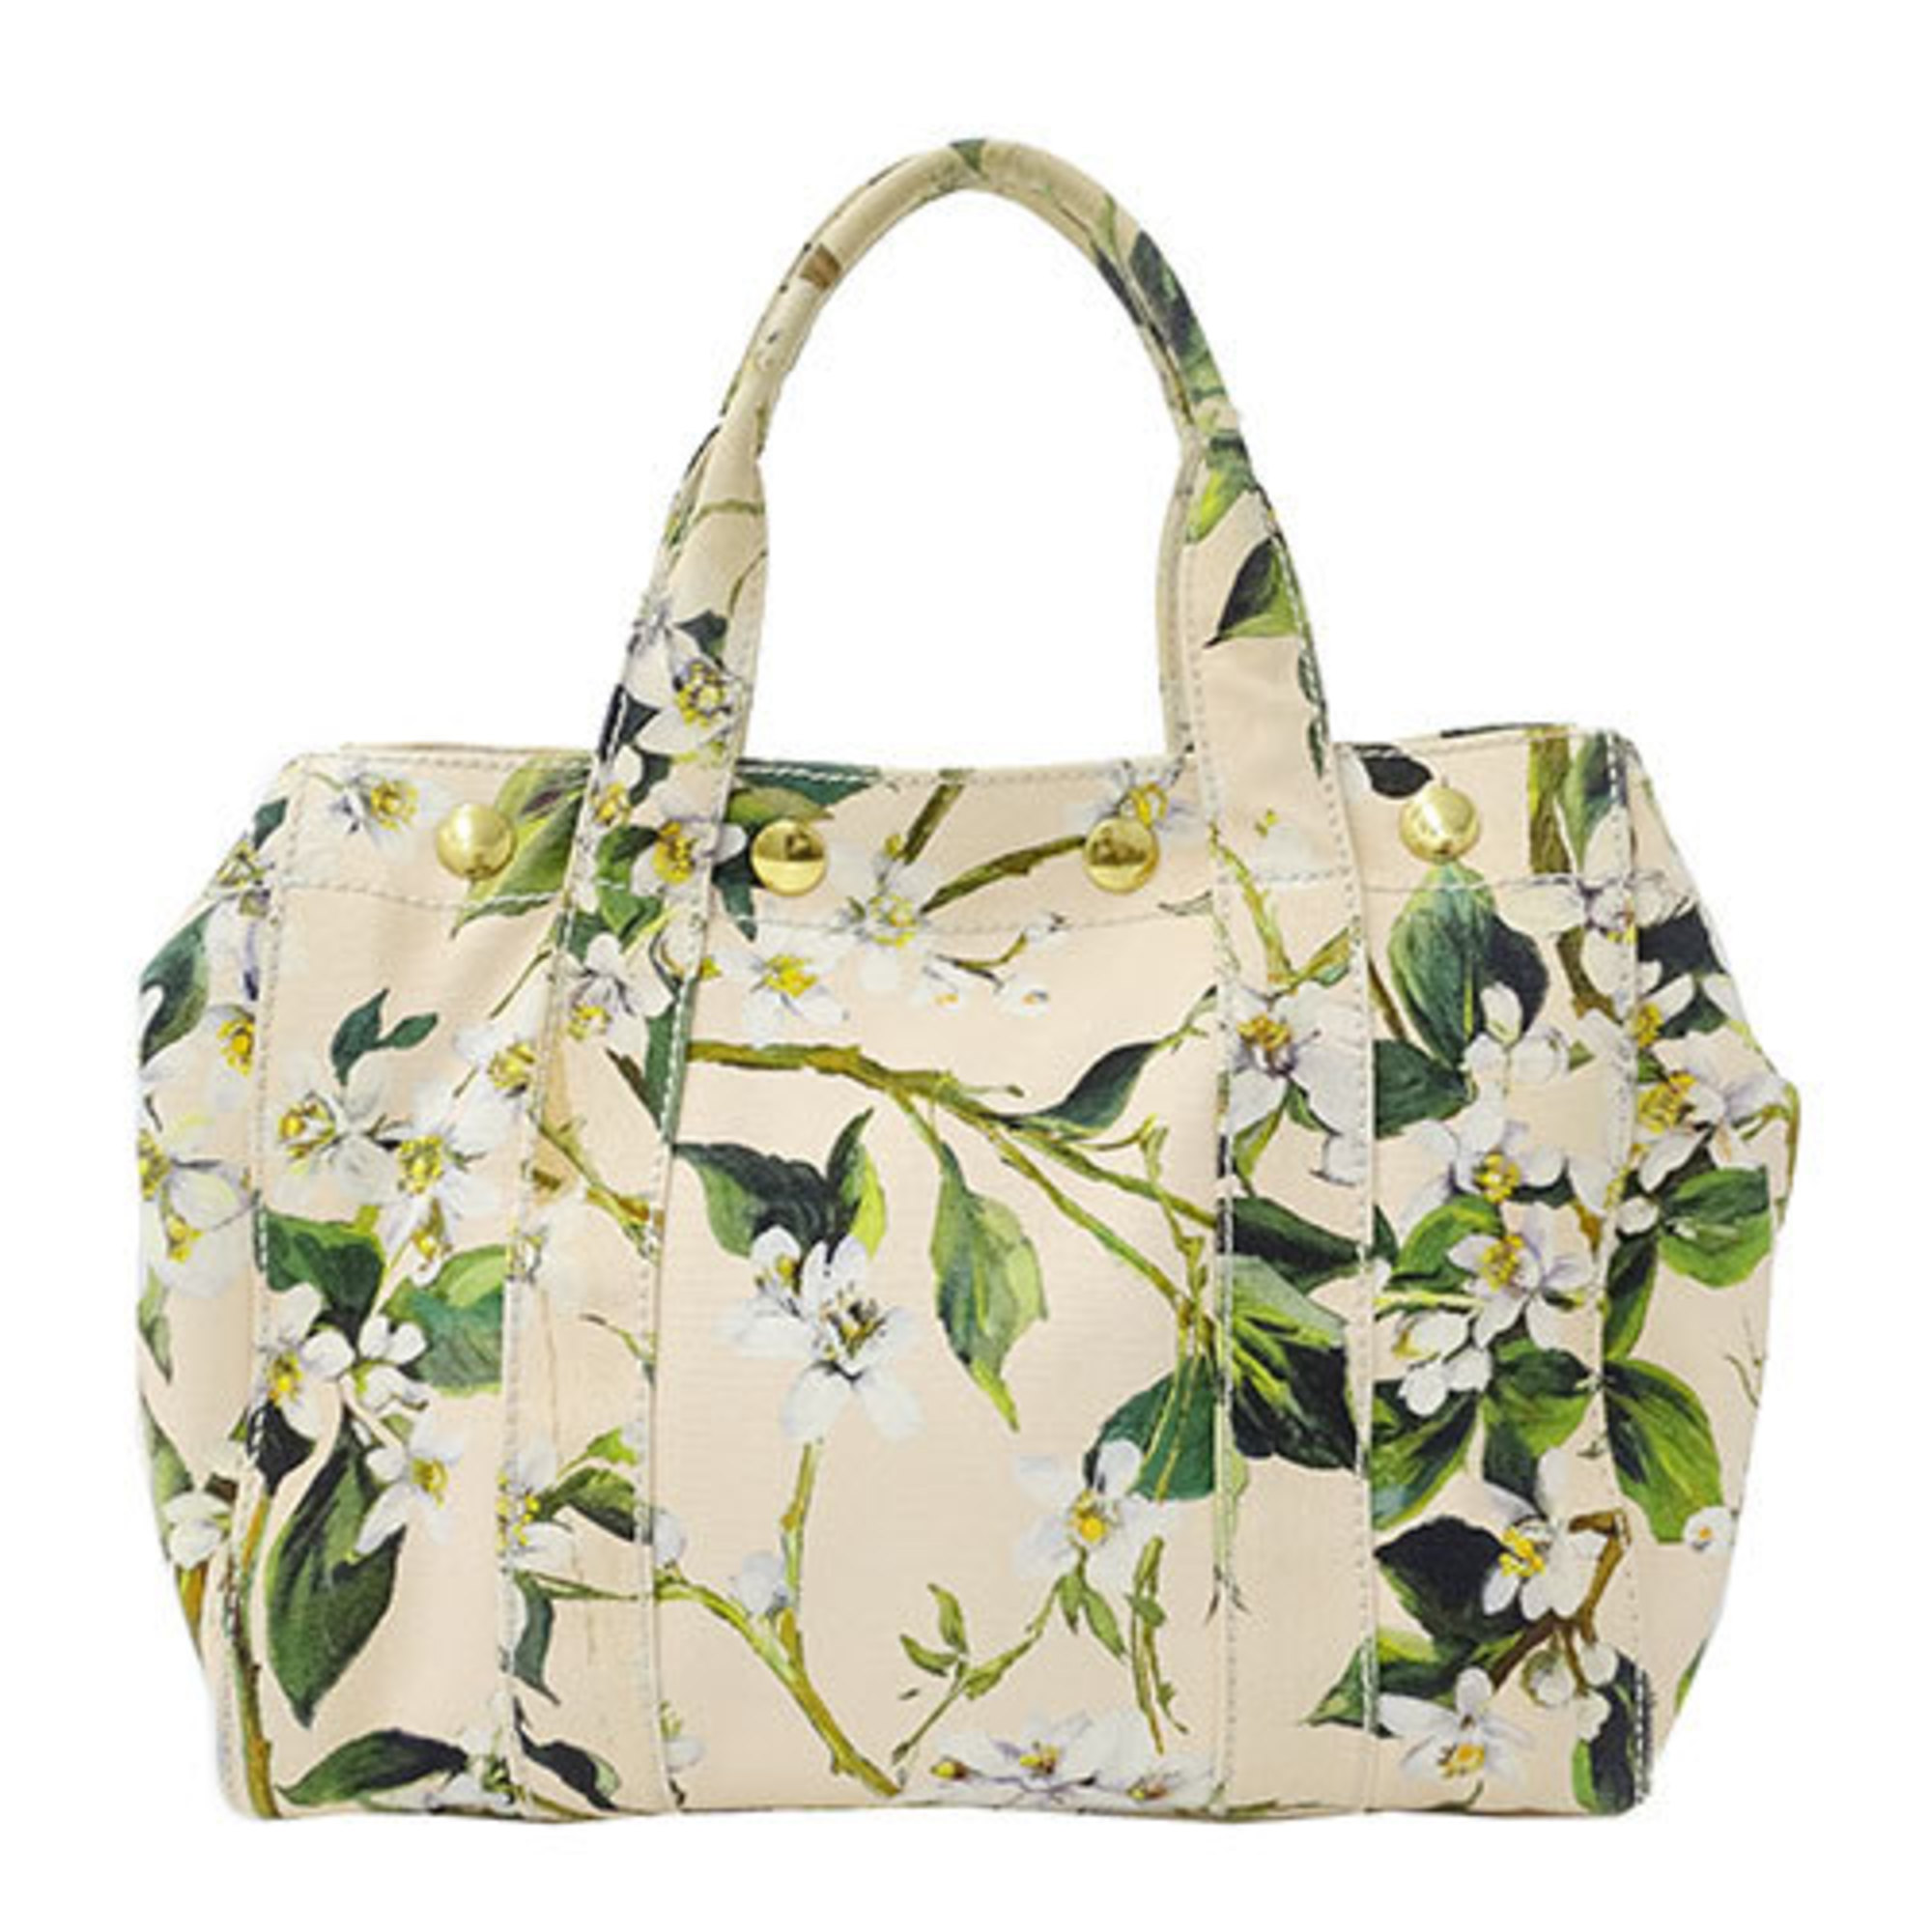 Dolce & Gabbana Women's Handbag Canvas Beige Flower